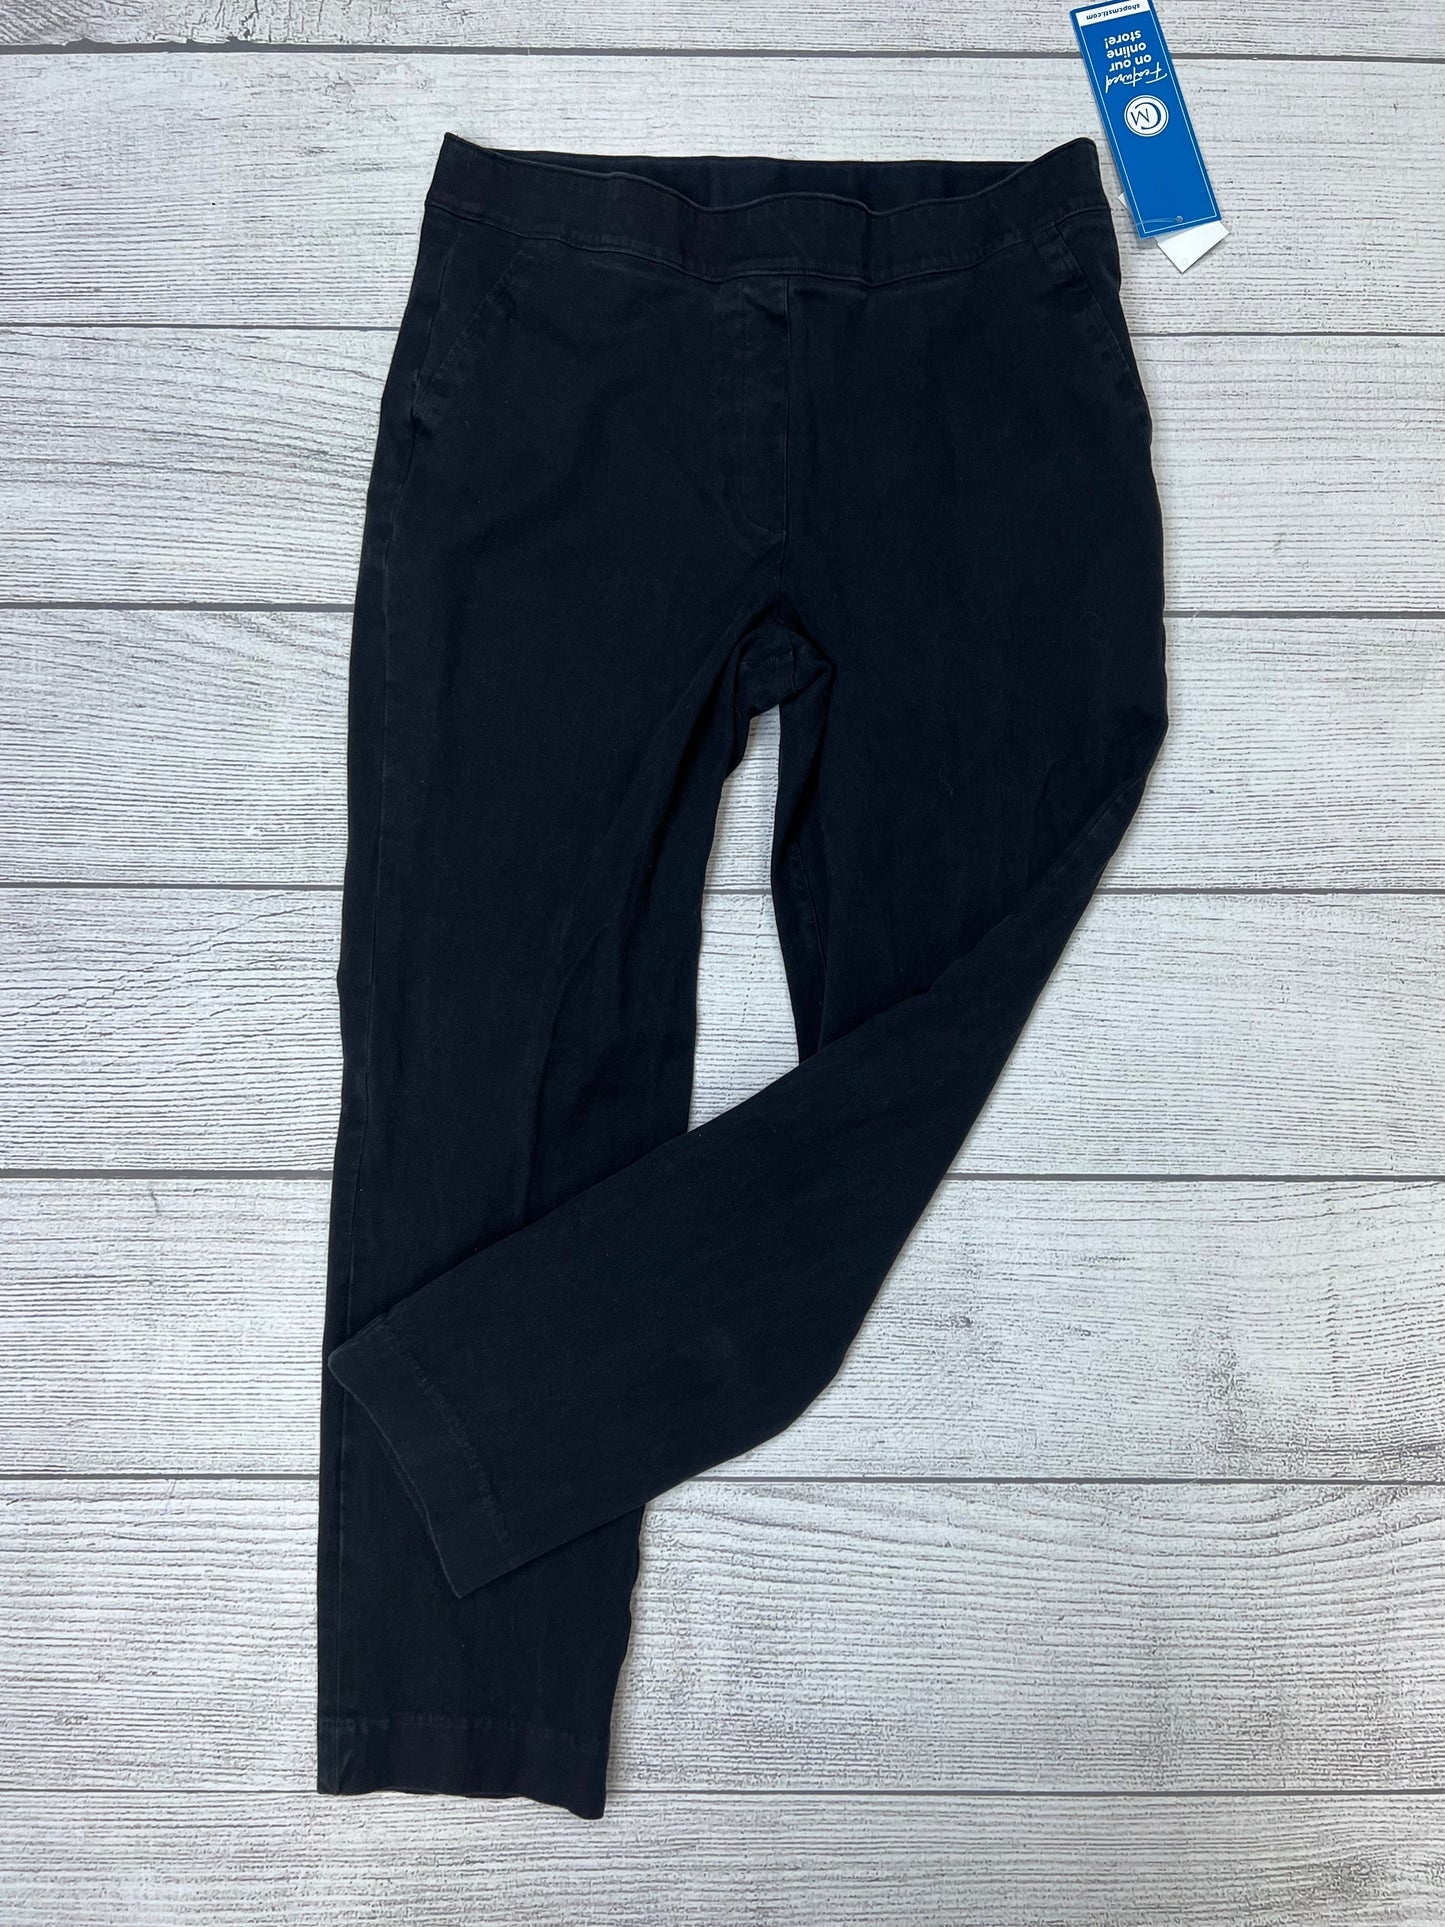 Black Pants Designer Spanx, Size L